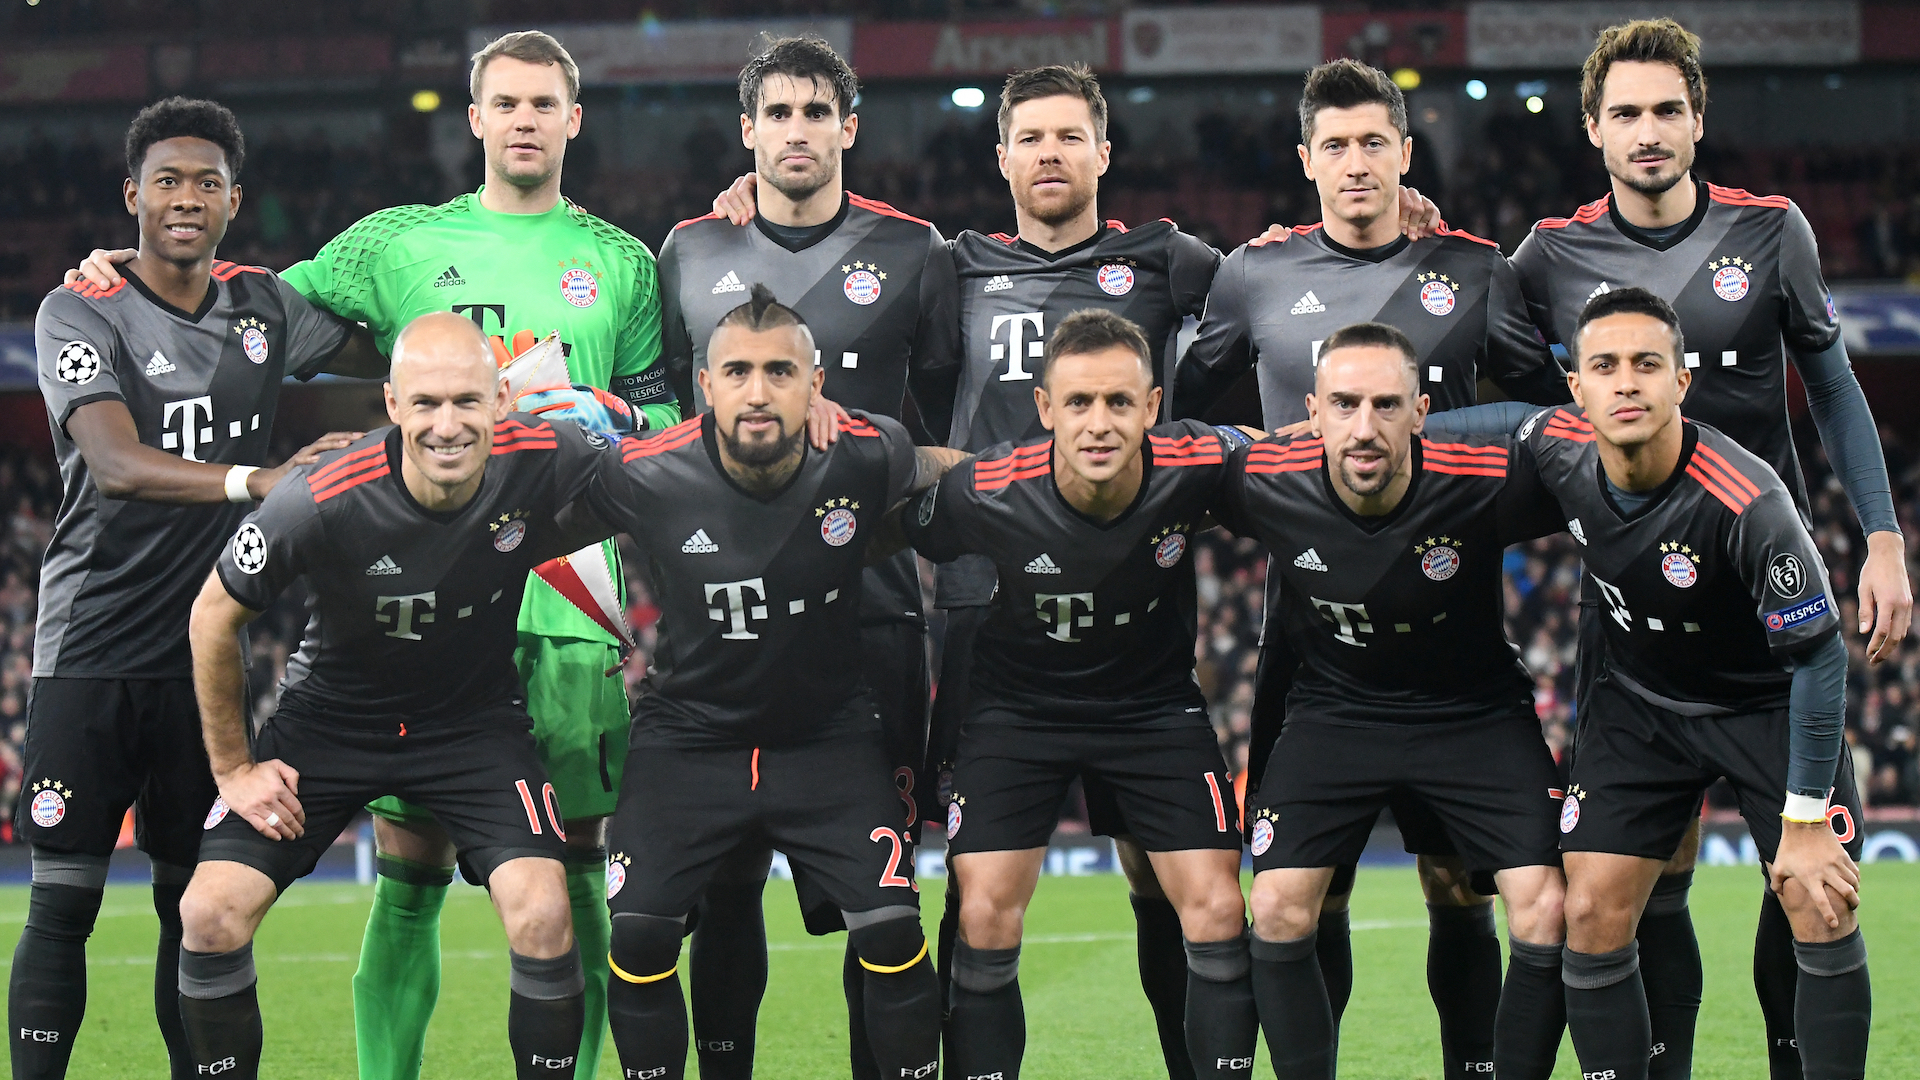 The Bayern Munich team in 2017